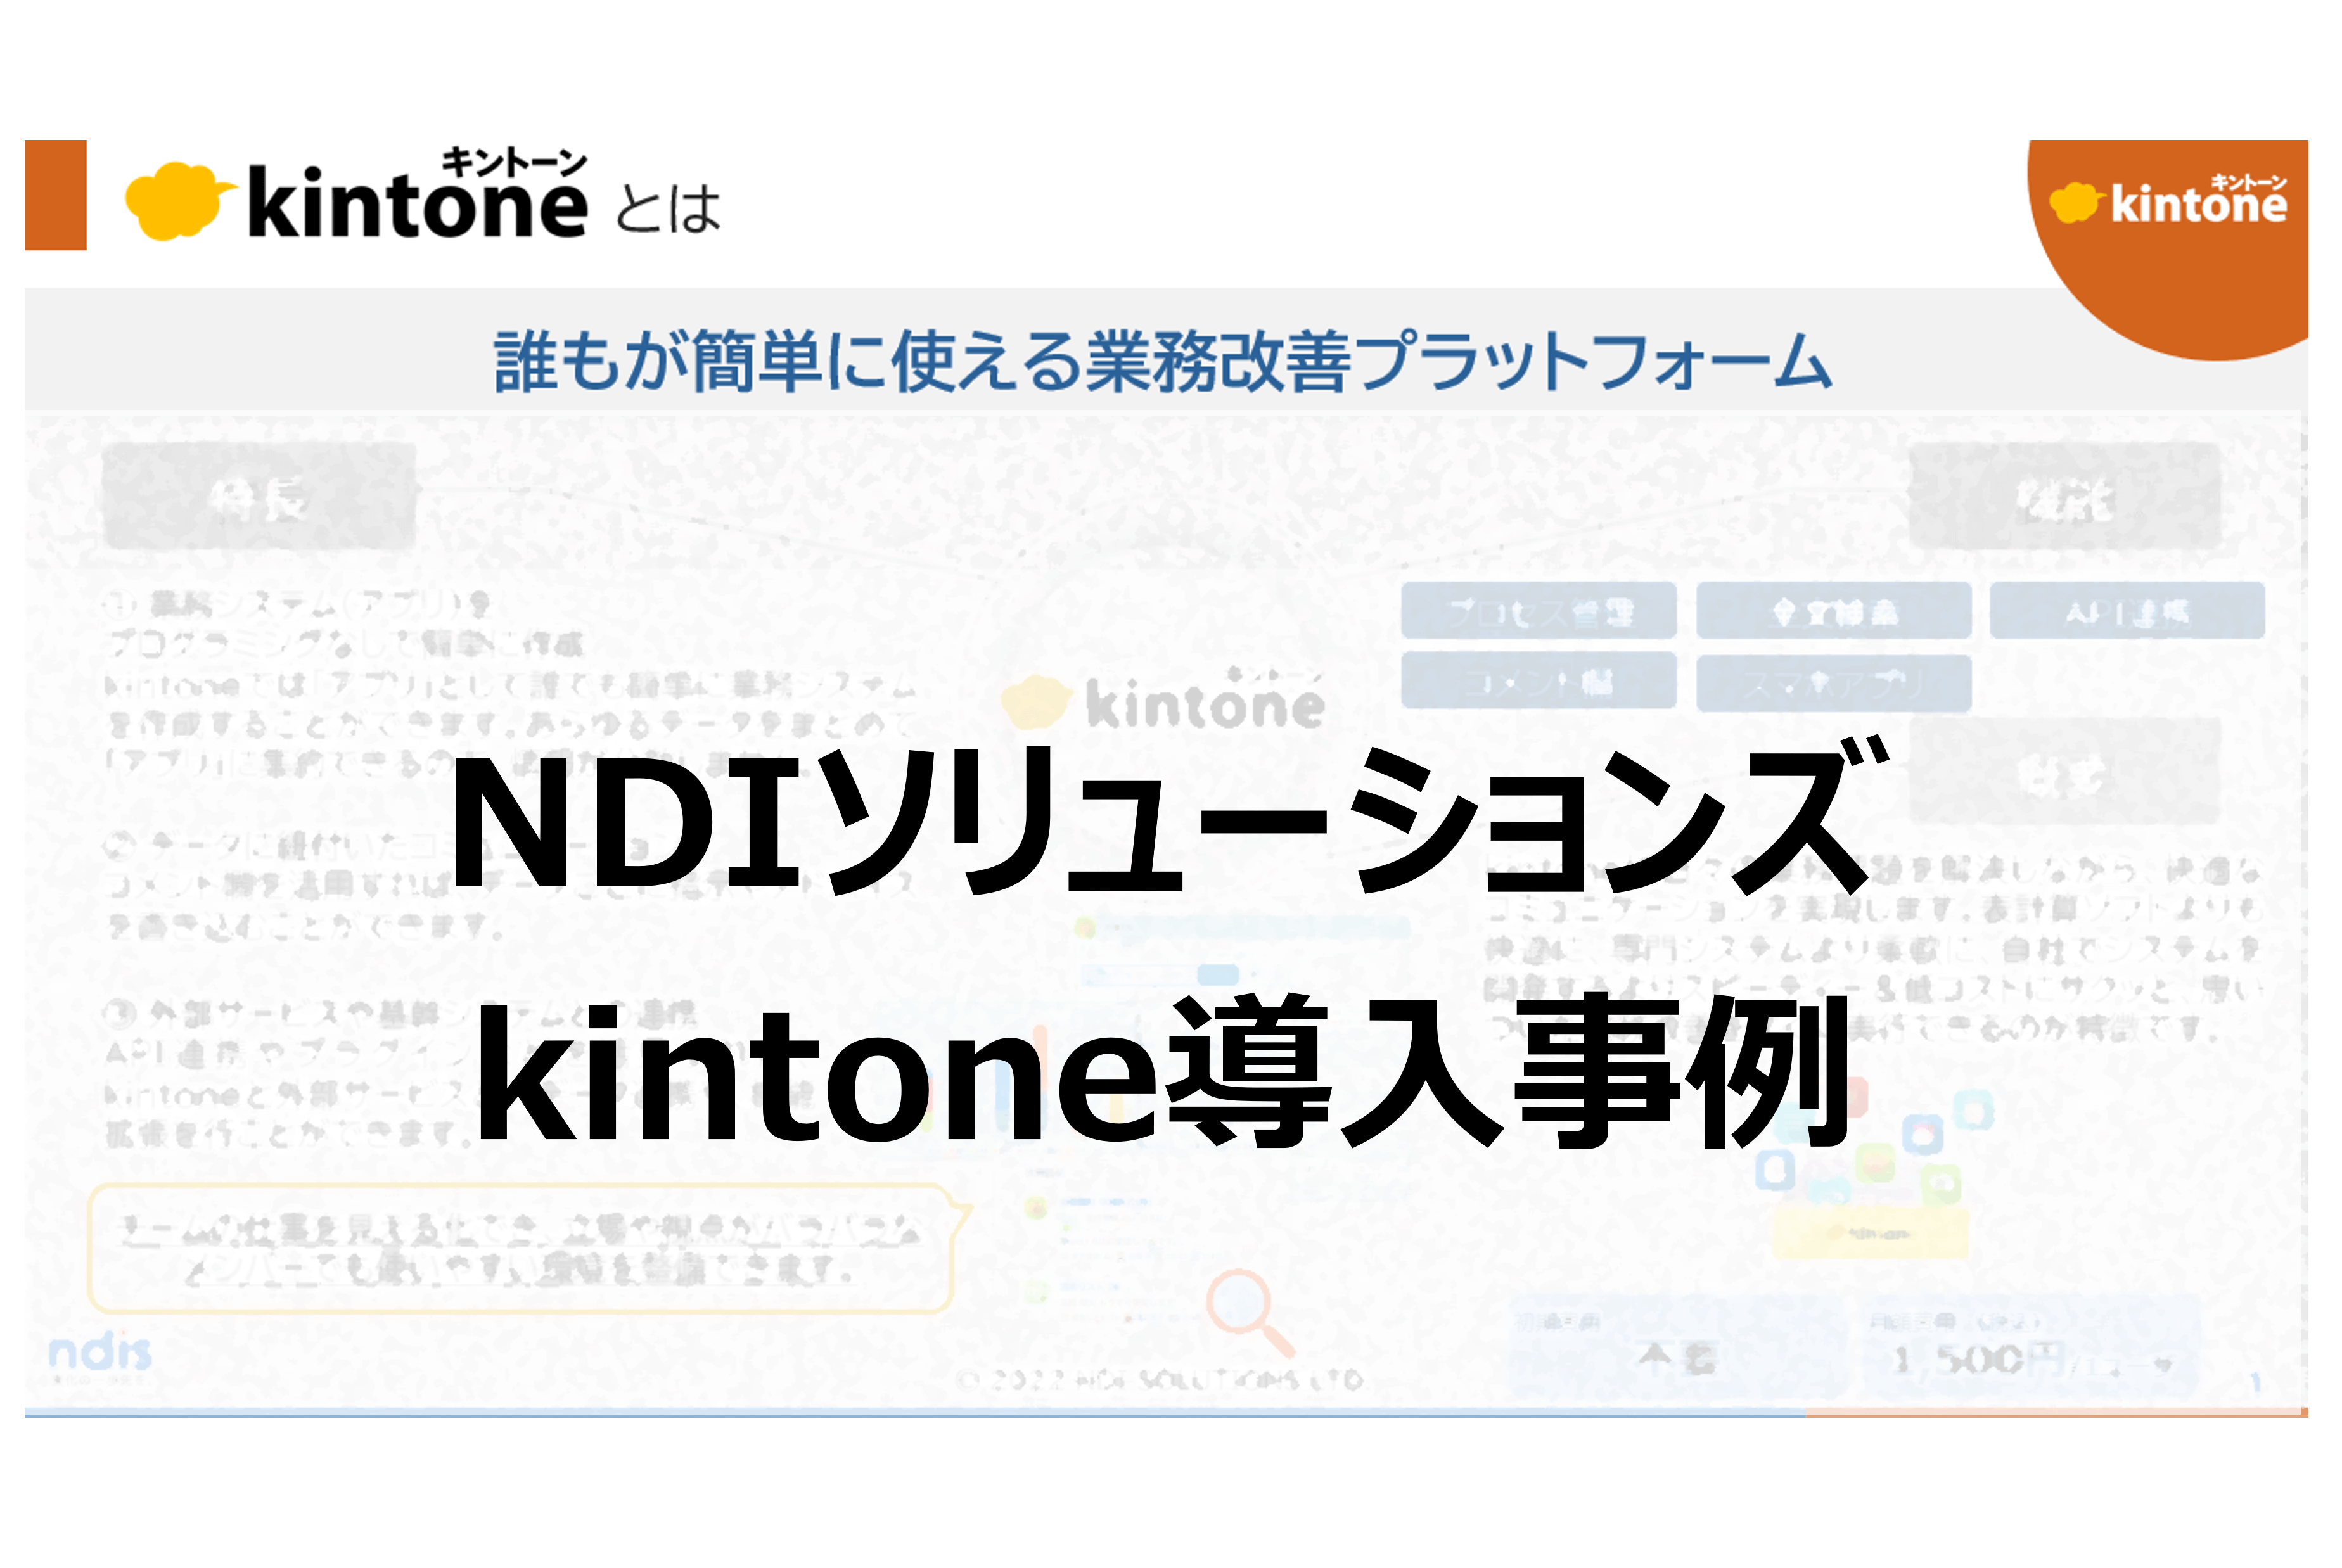 kintoneNDIS導入事例kintone 概要